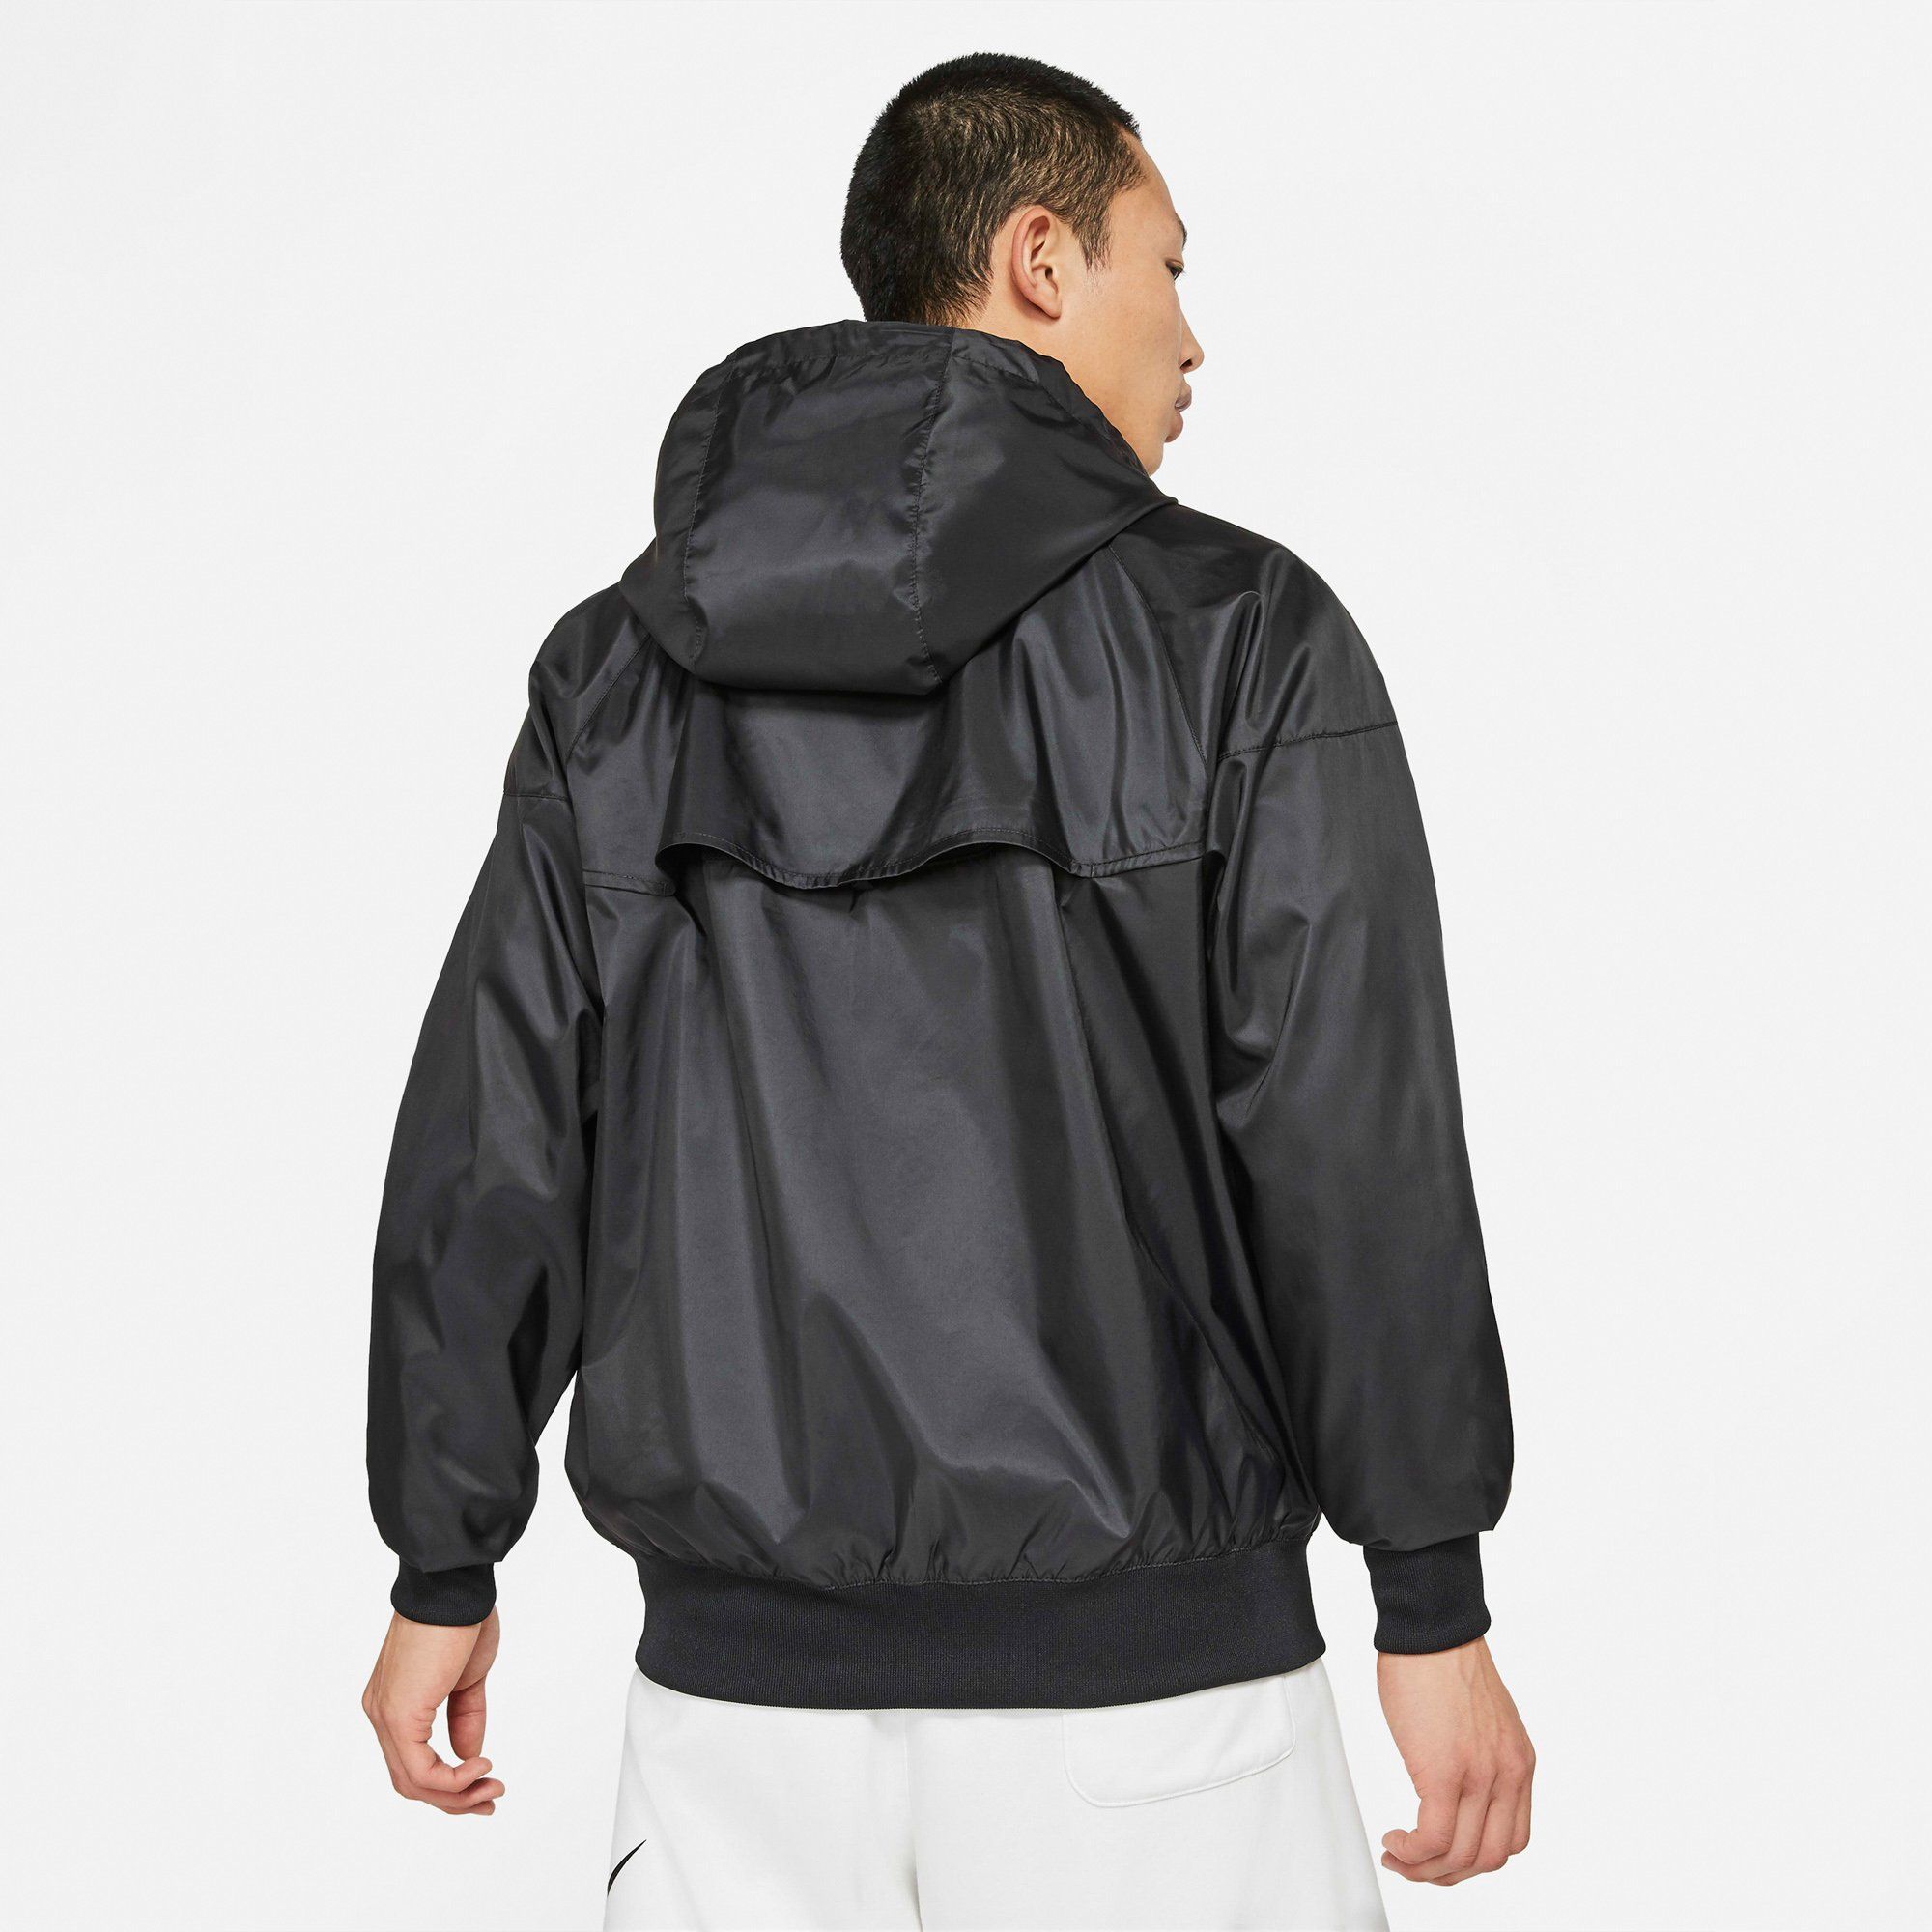  Nike Sportswear Windrunner Hooded Jacket - Black/Black 